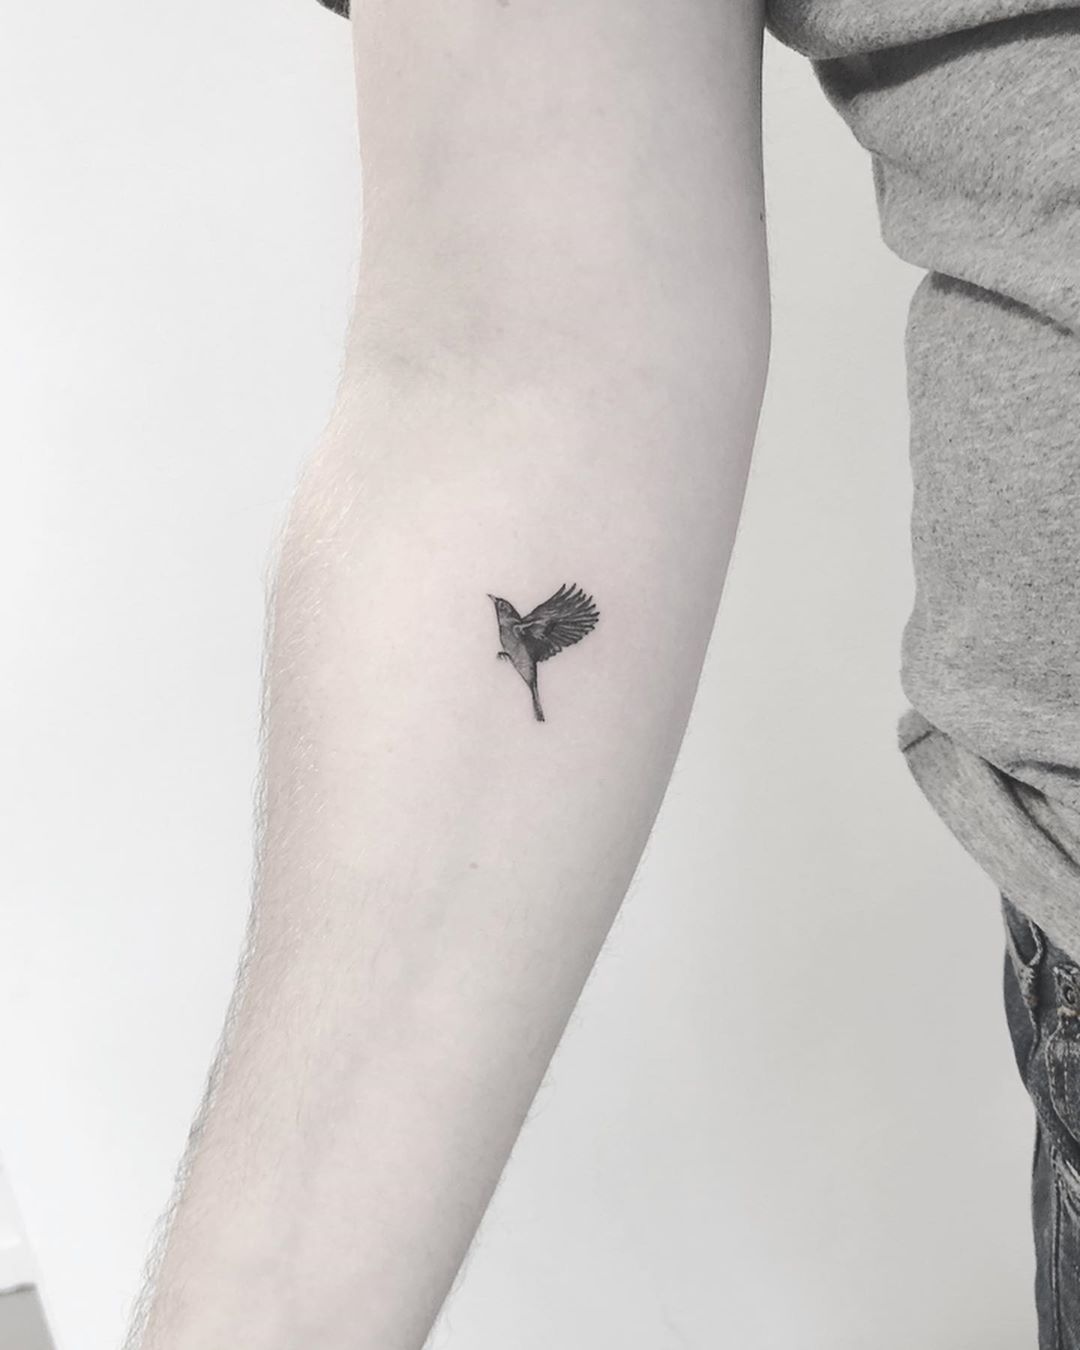 Tiny blackbird tattoo by Annelie Fransson 